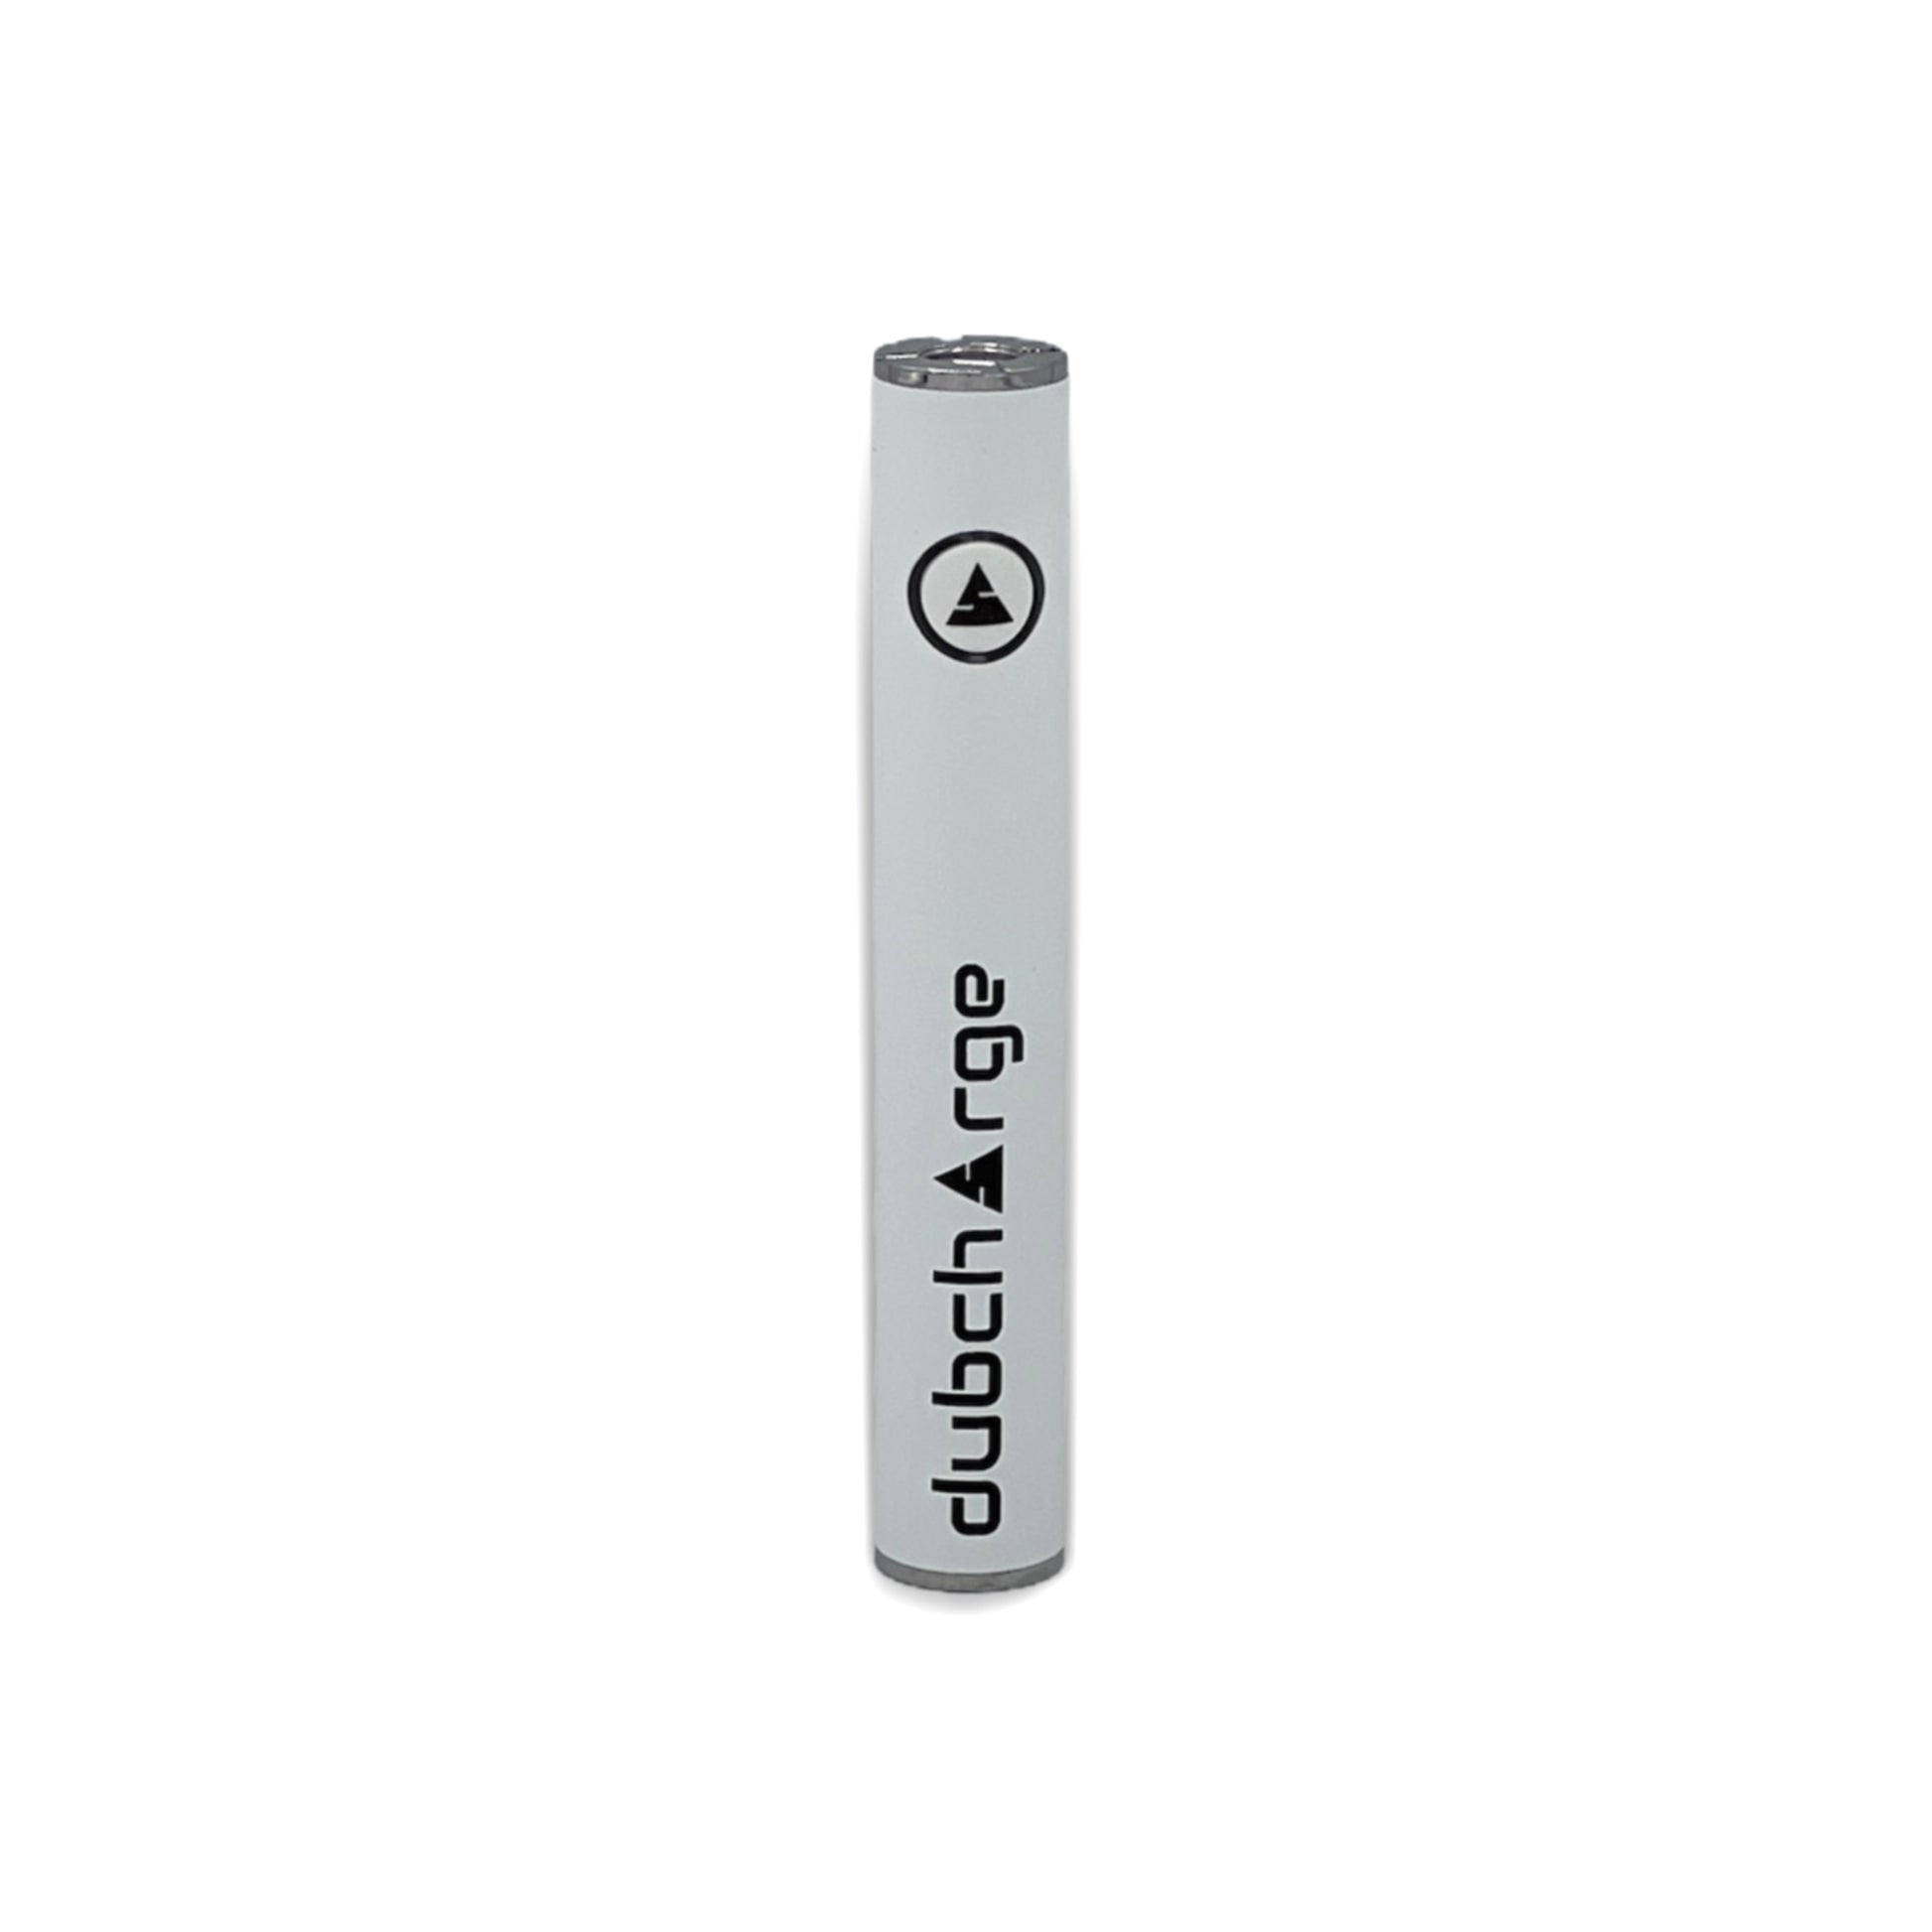 510 Thread Vaporizer Battery - 650 mAh V3 (WHITE) - High-Quality Battery for Vaping Devices